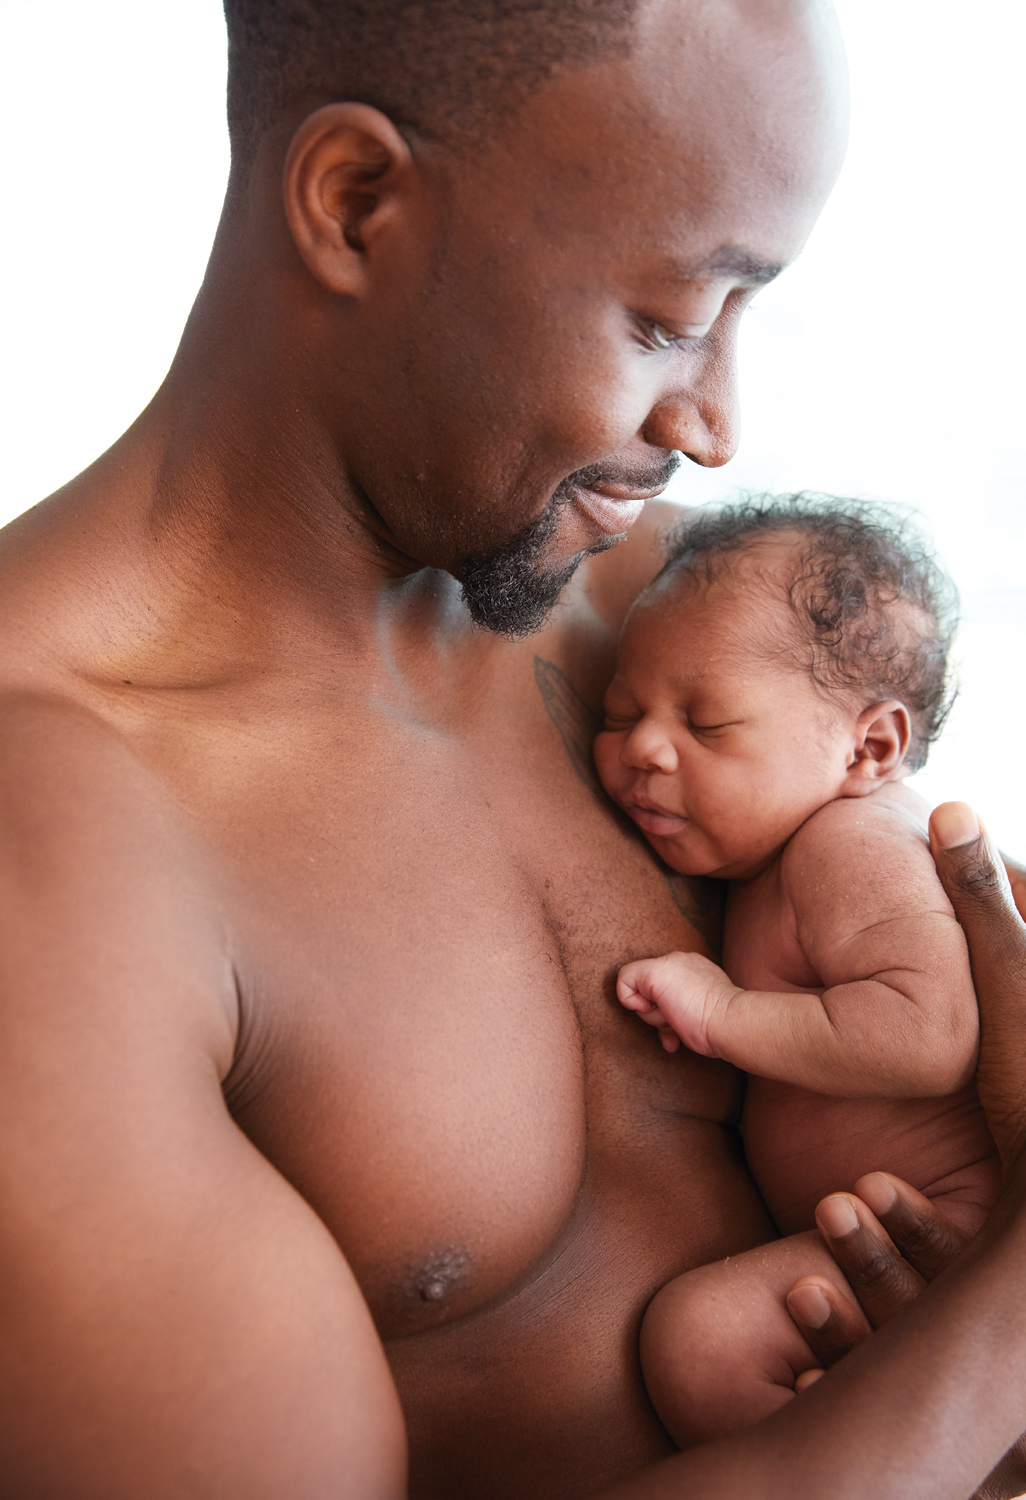 Texas health black man bonding with newborn by Buff Strickland photography